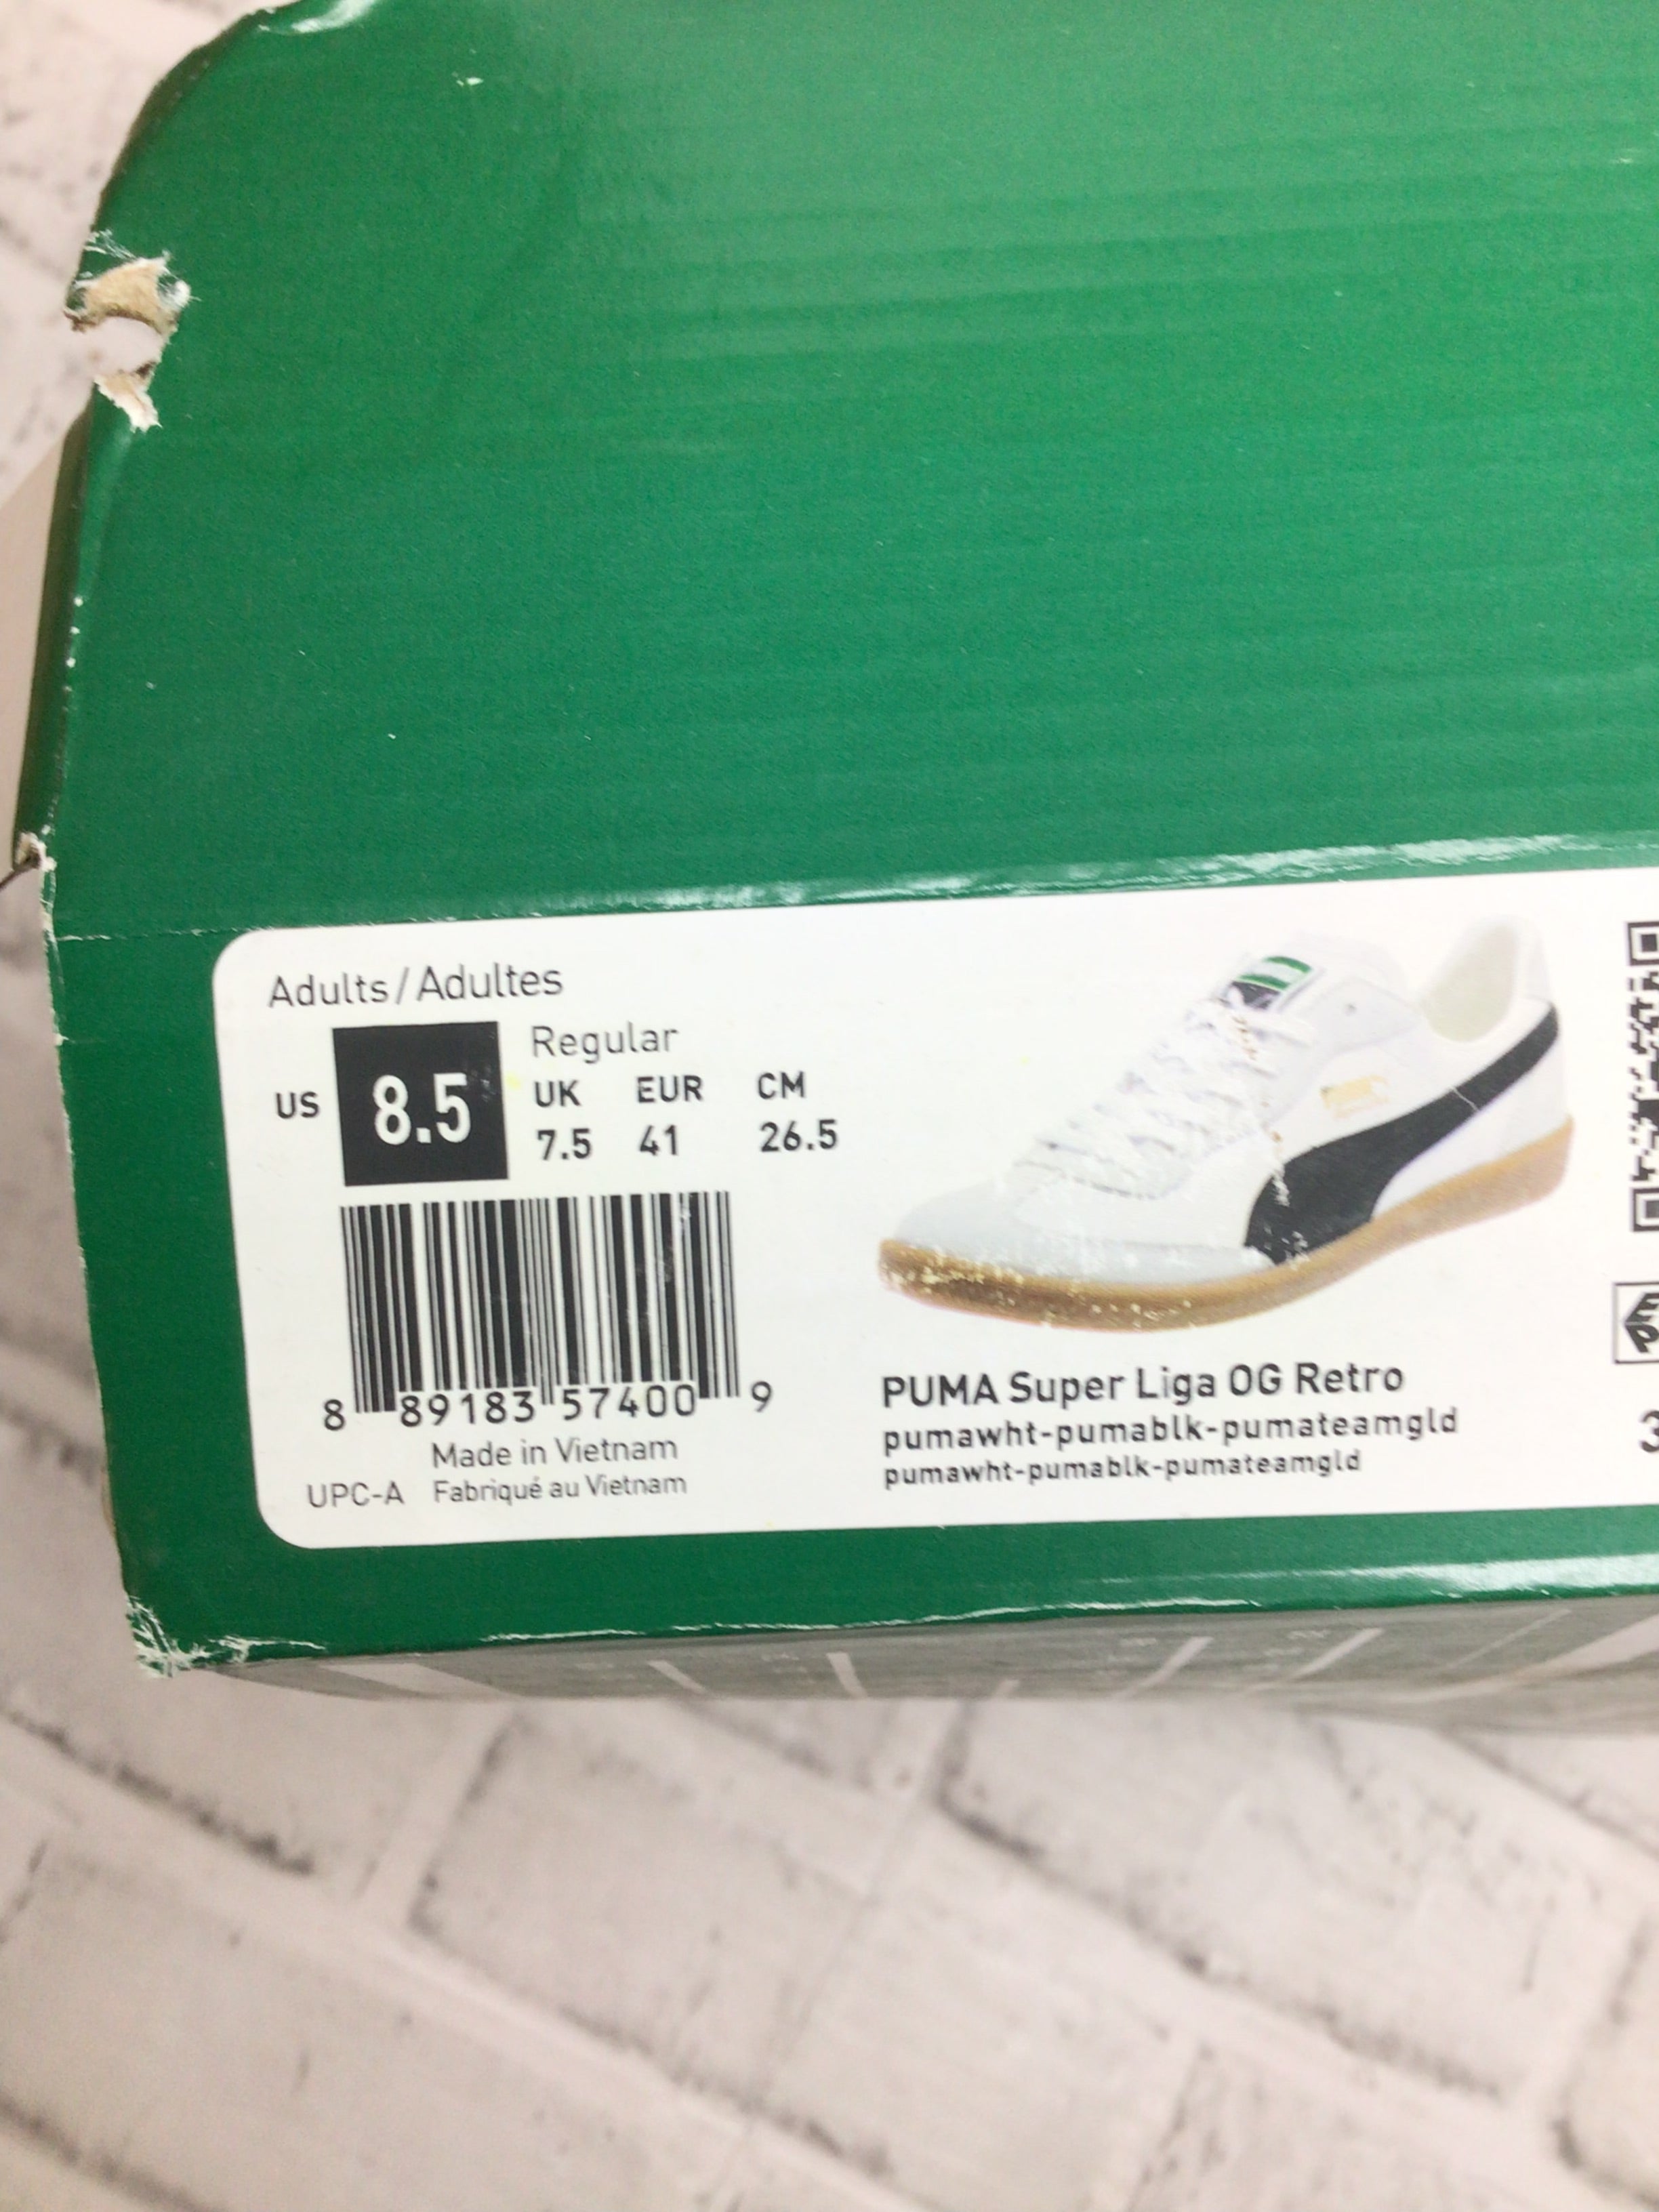 PUMA Men's Super Liga Og Sneaker 356999-12 Size 8.5 (8115668812014)